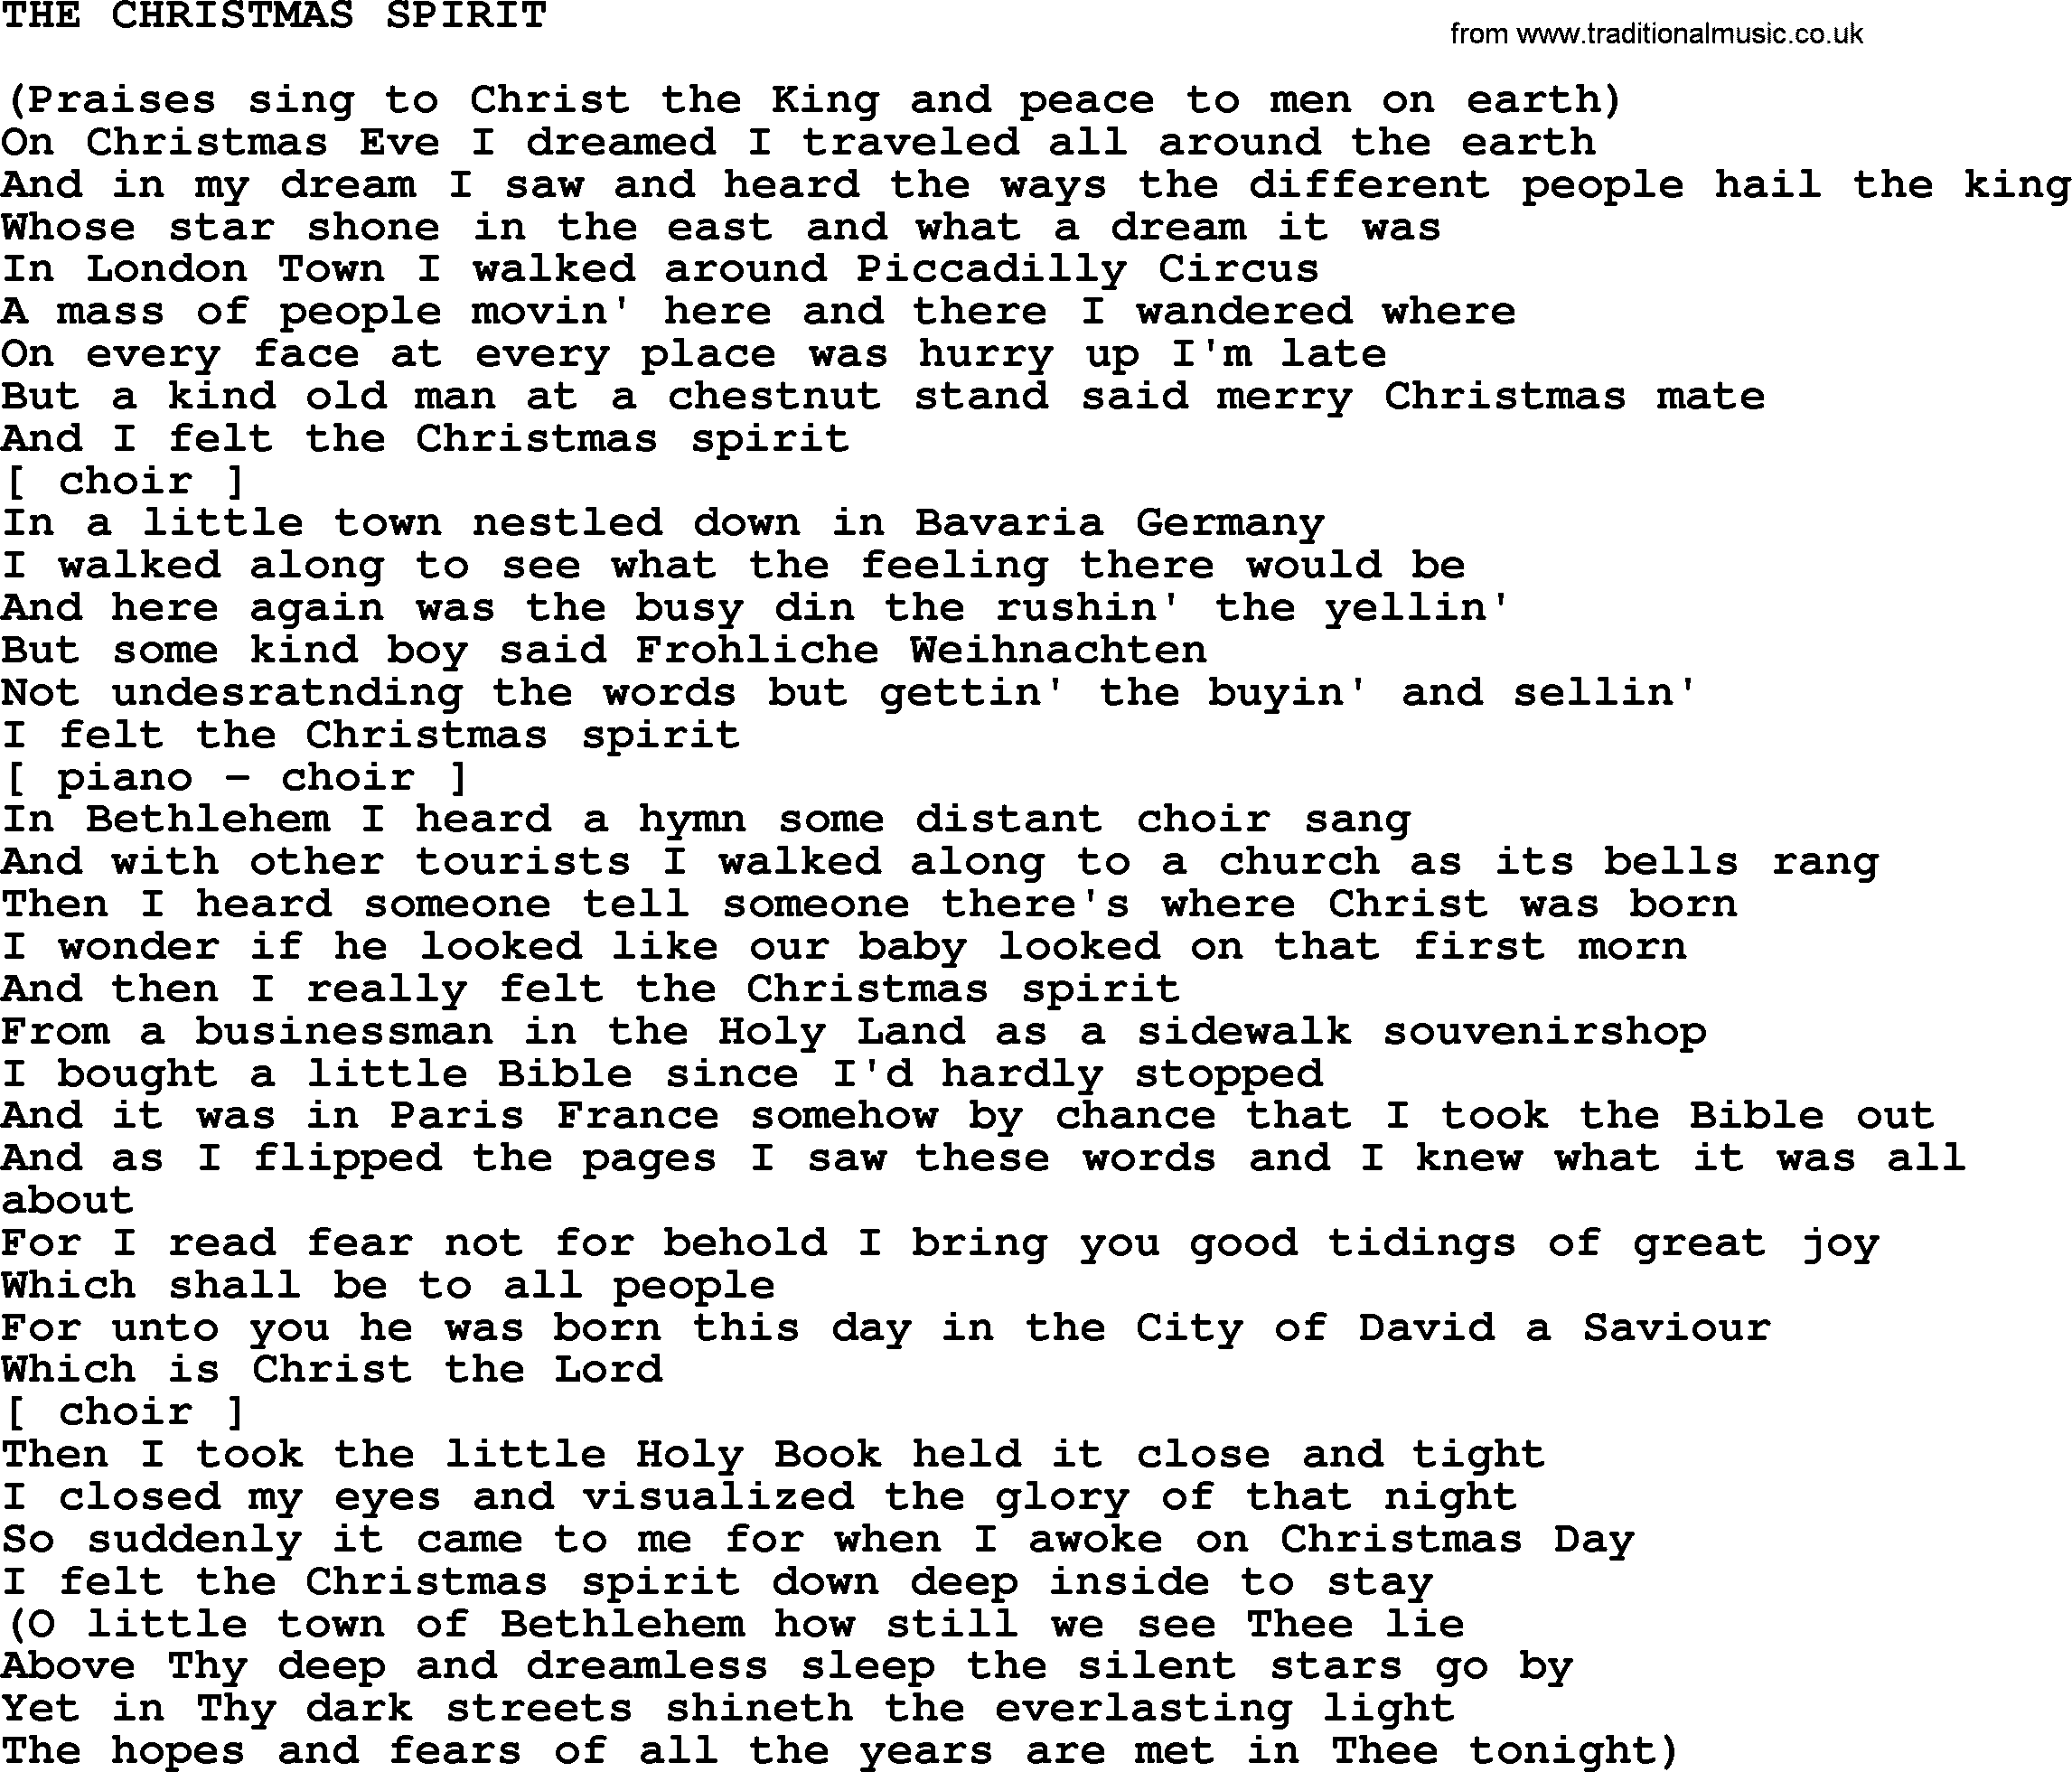 Johnny Cash song The Christmas Spirit.txt lyrics